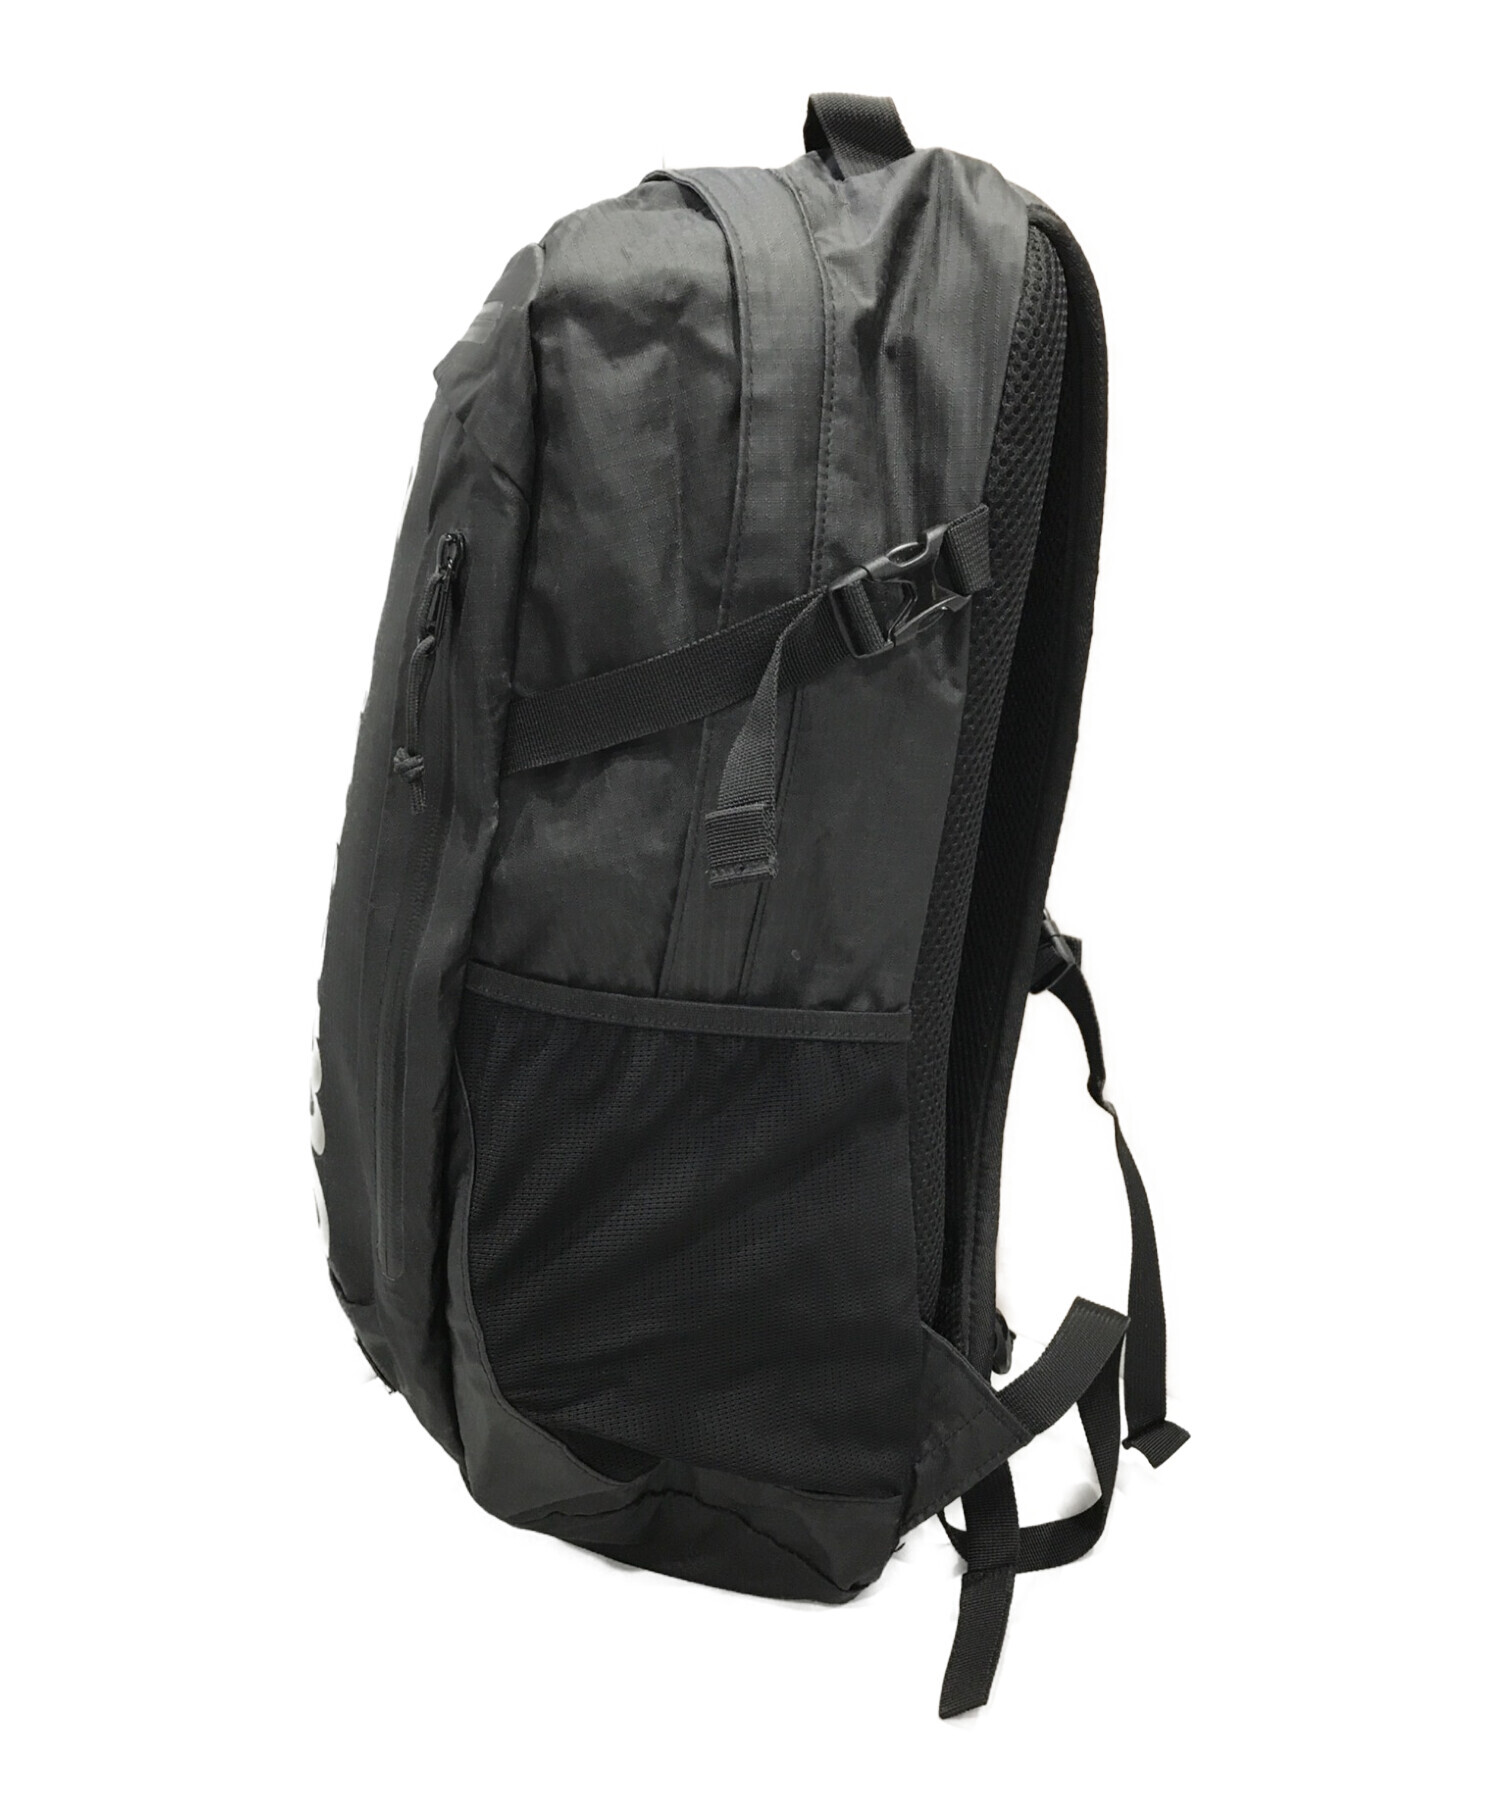 Supreme (シュプリーム) 21ss backpack ブラック